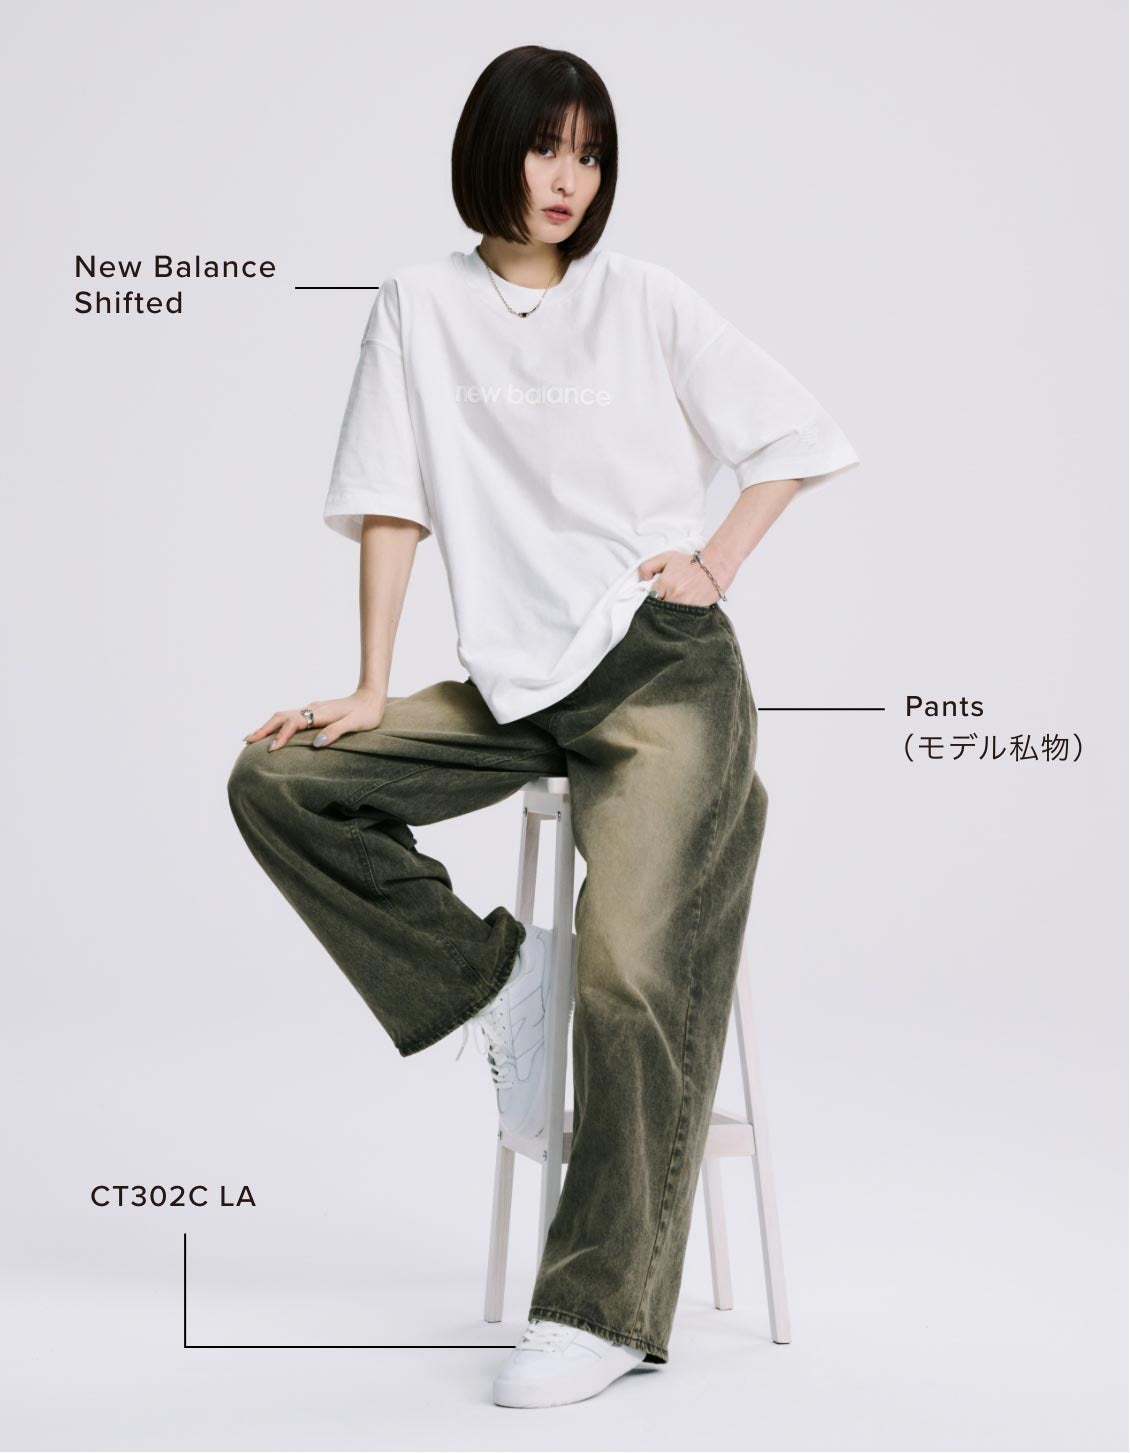 Hikaru Yokota outfit details: T-shirt: New Balance Shifted, Pants: Model's own, Shoes: CT302C LA